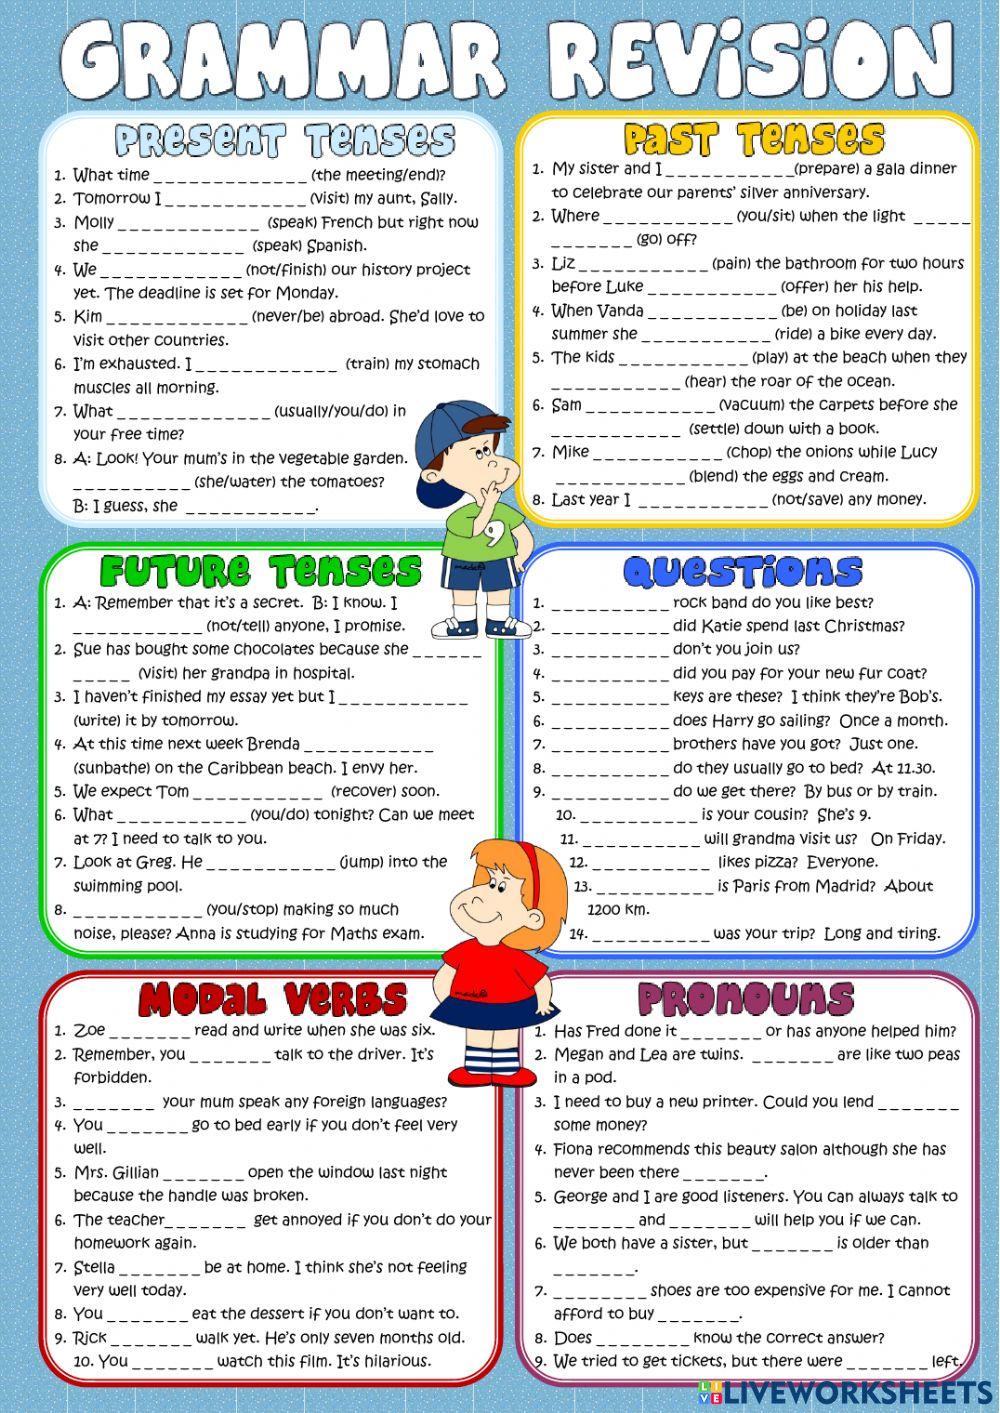 Tenses, modal verbs and pronouns revision